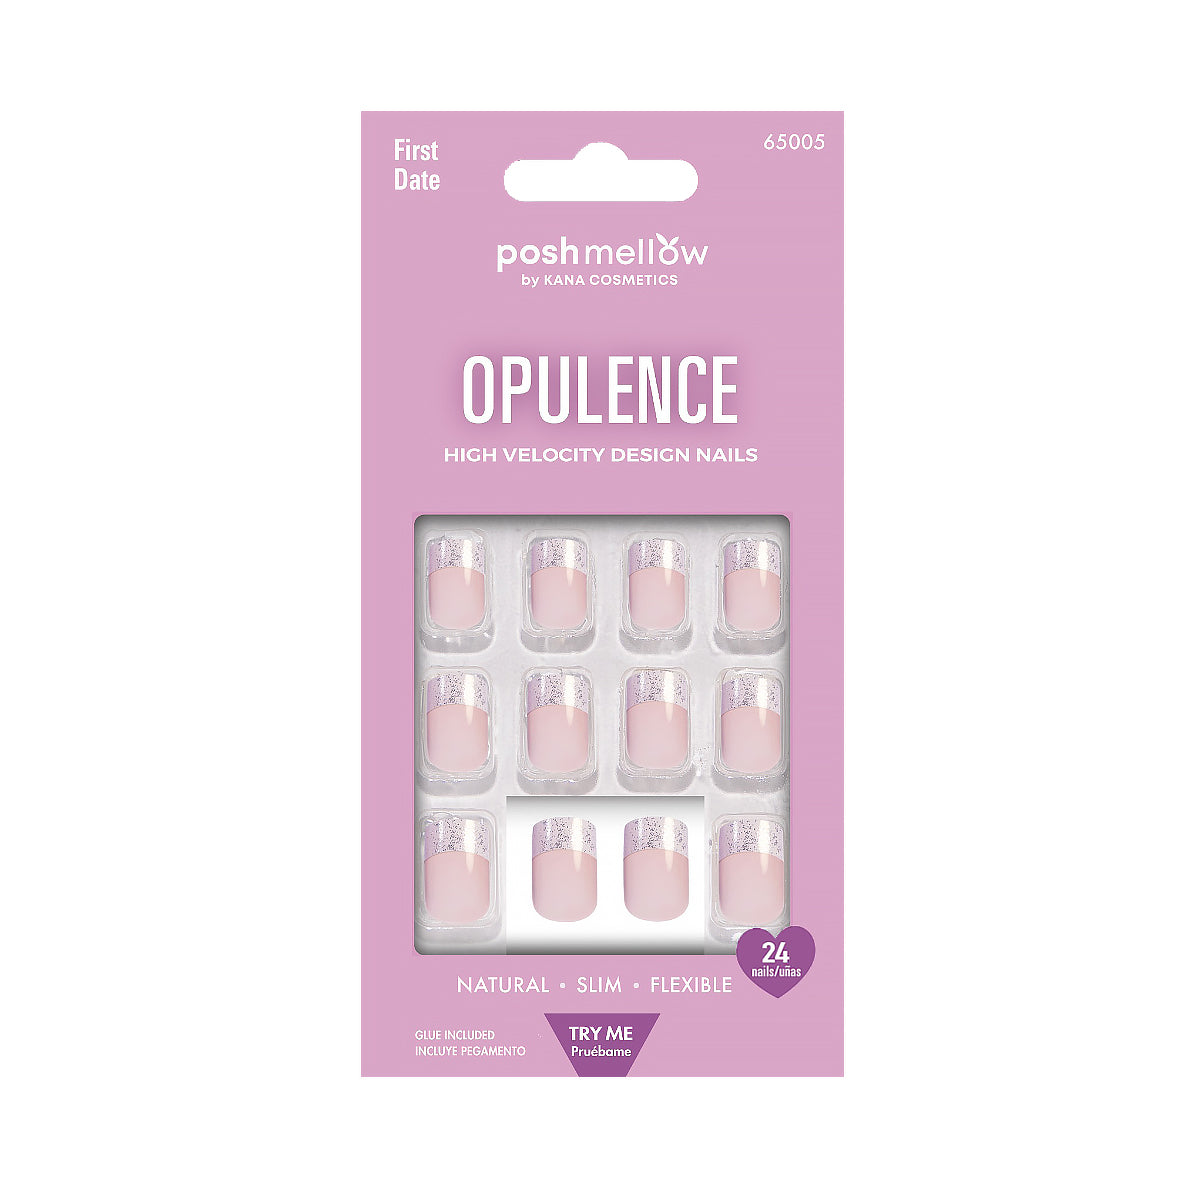 Opulence - First Date